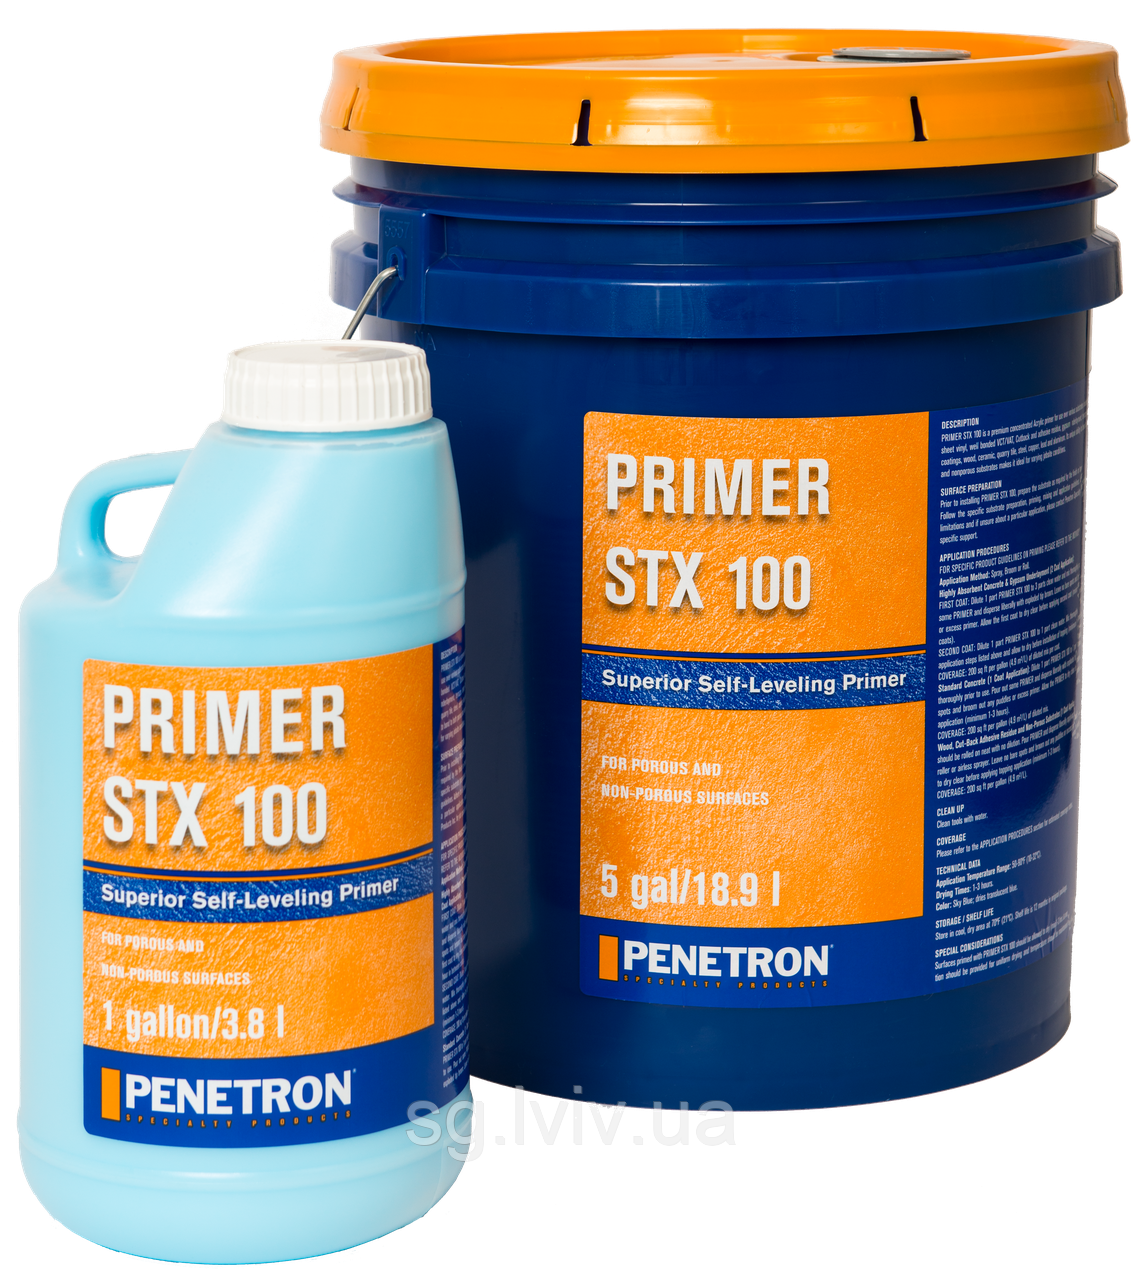 PRIMER STX 100™